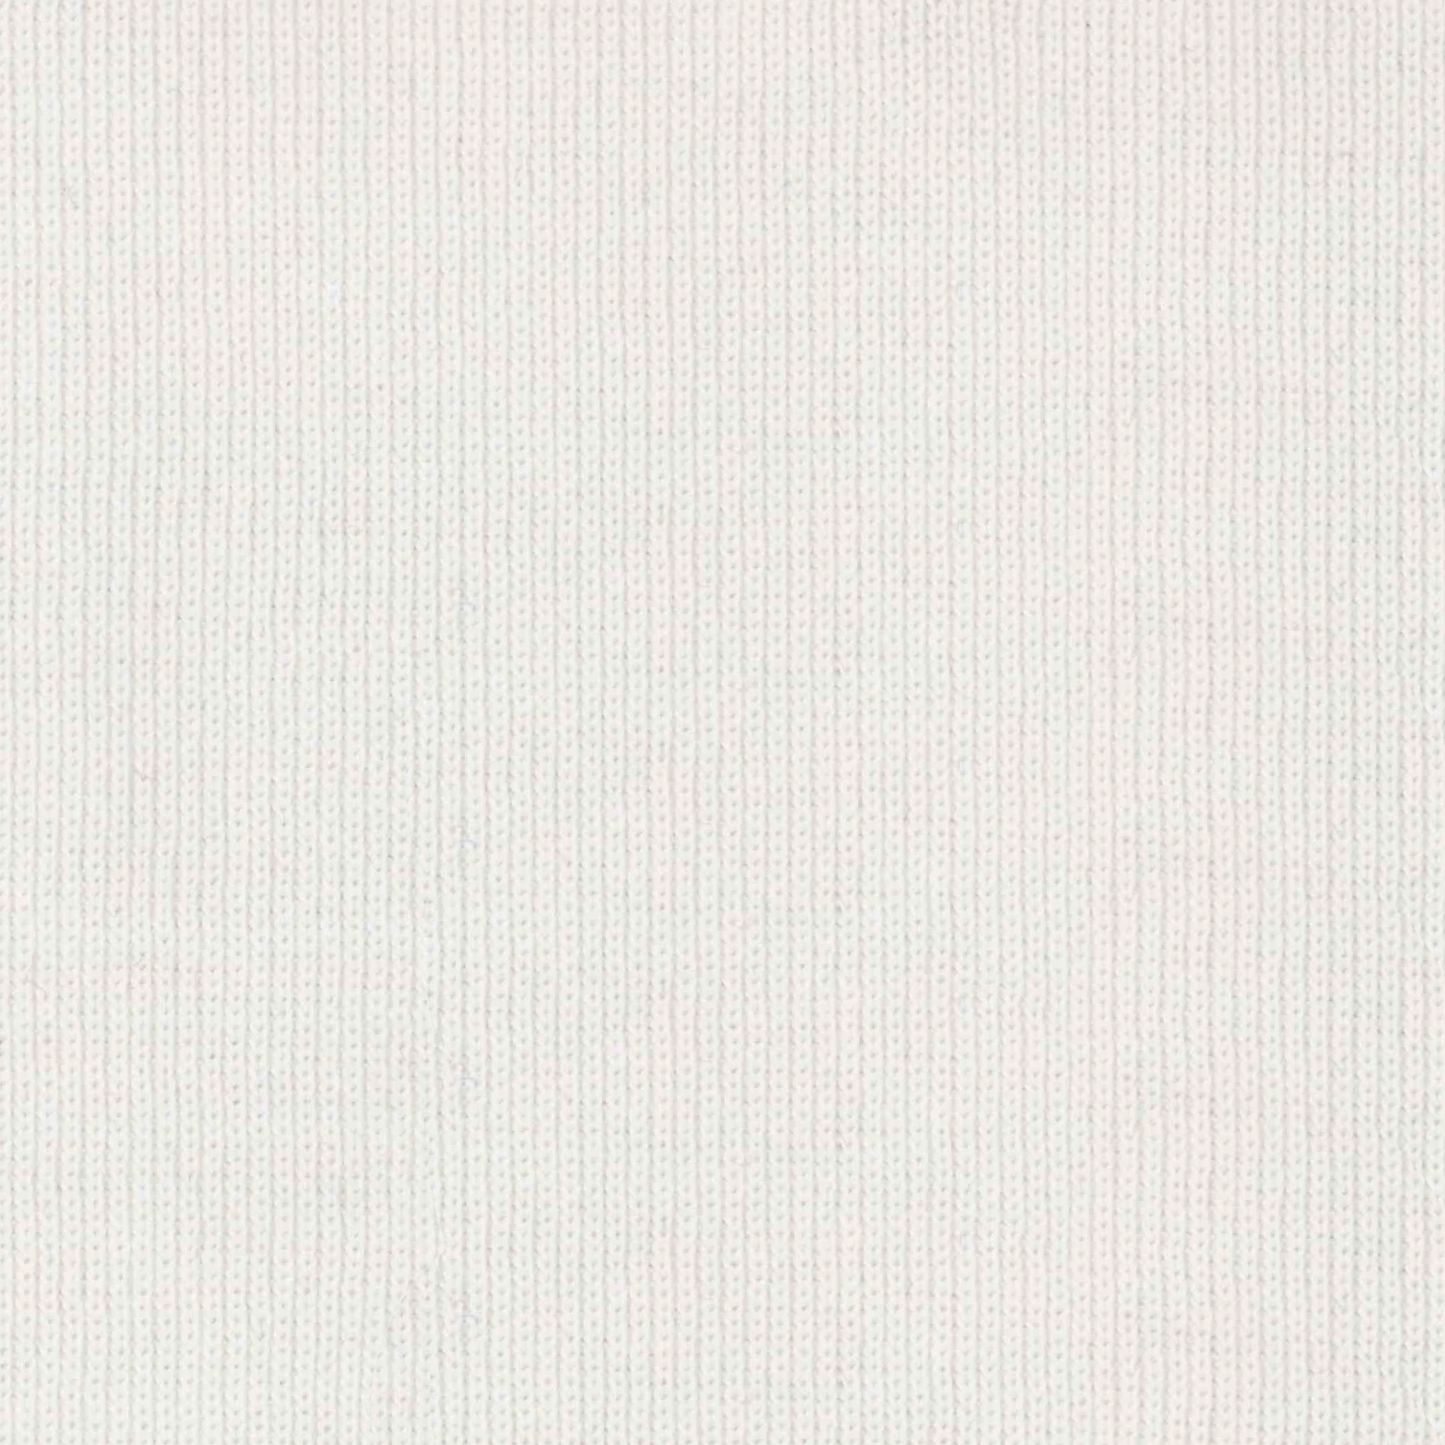 100% Organic Cotton Rib Knit - Bleached White (2RB164)